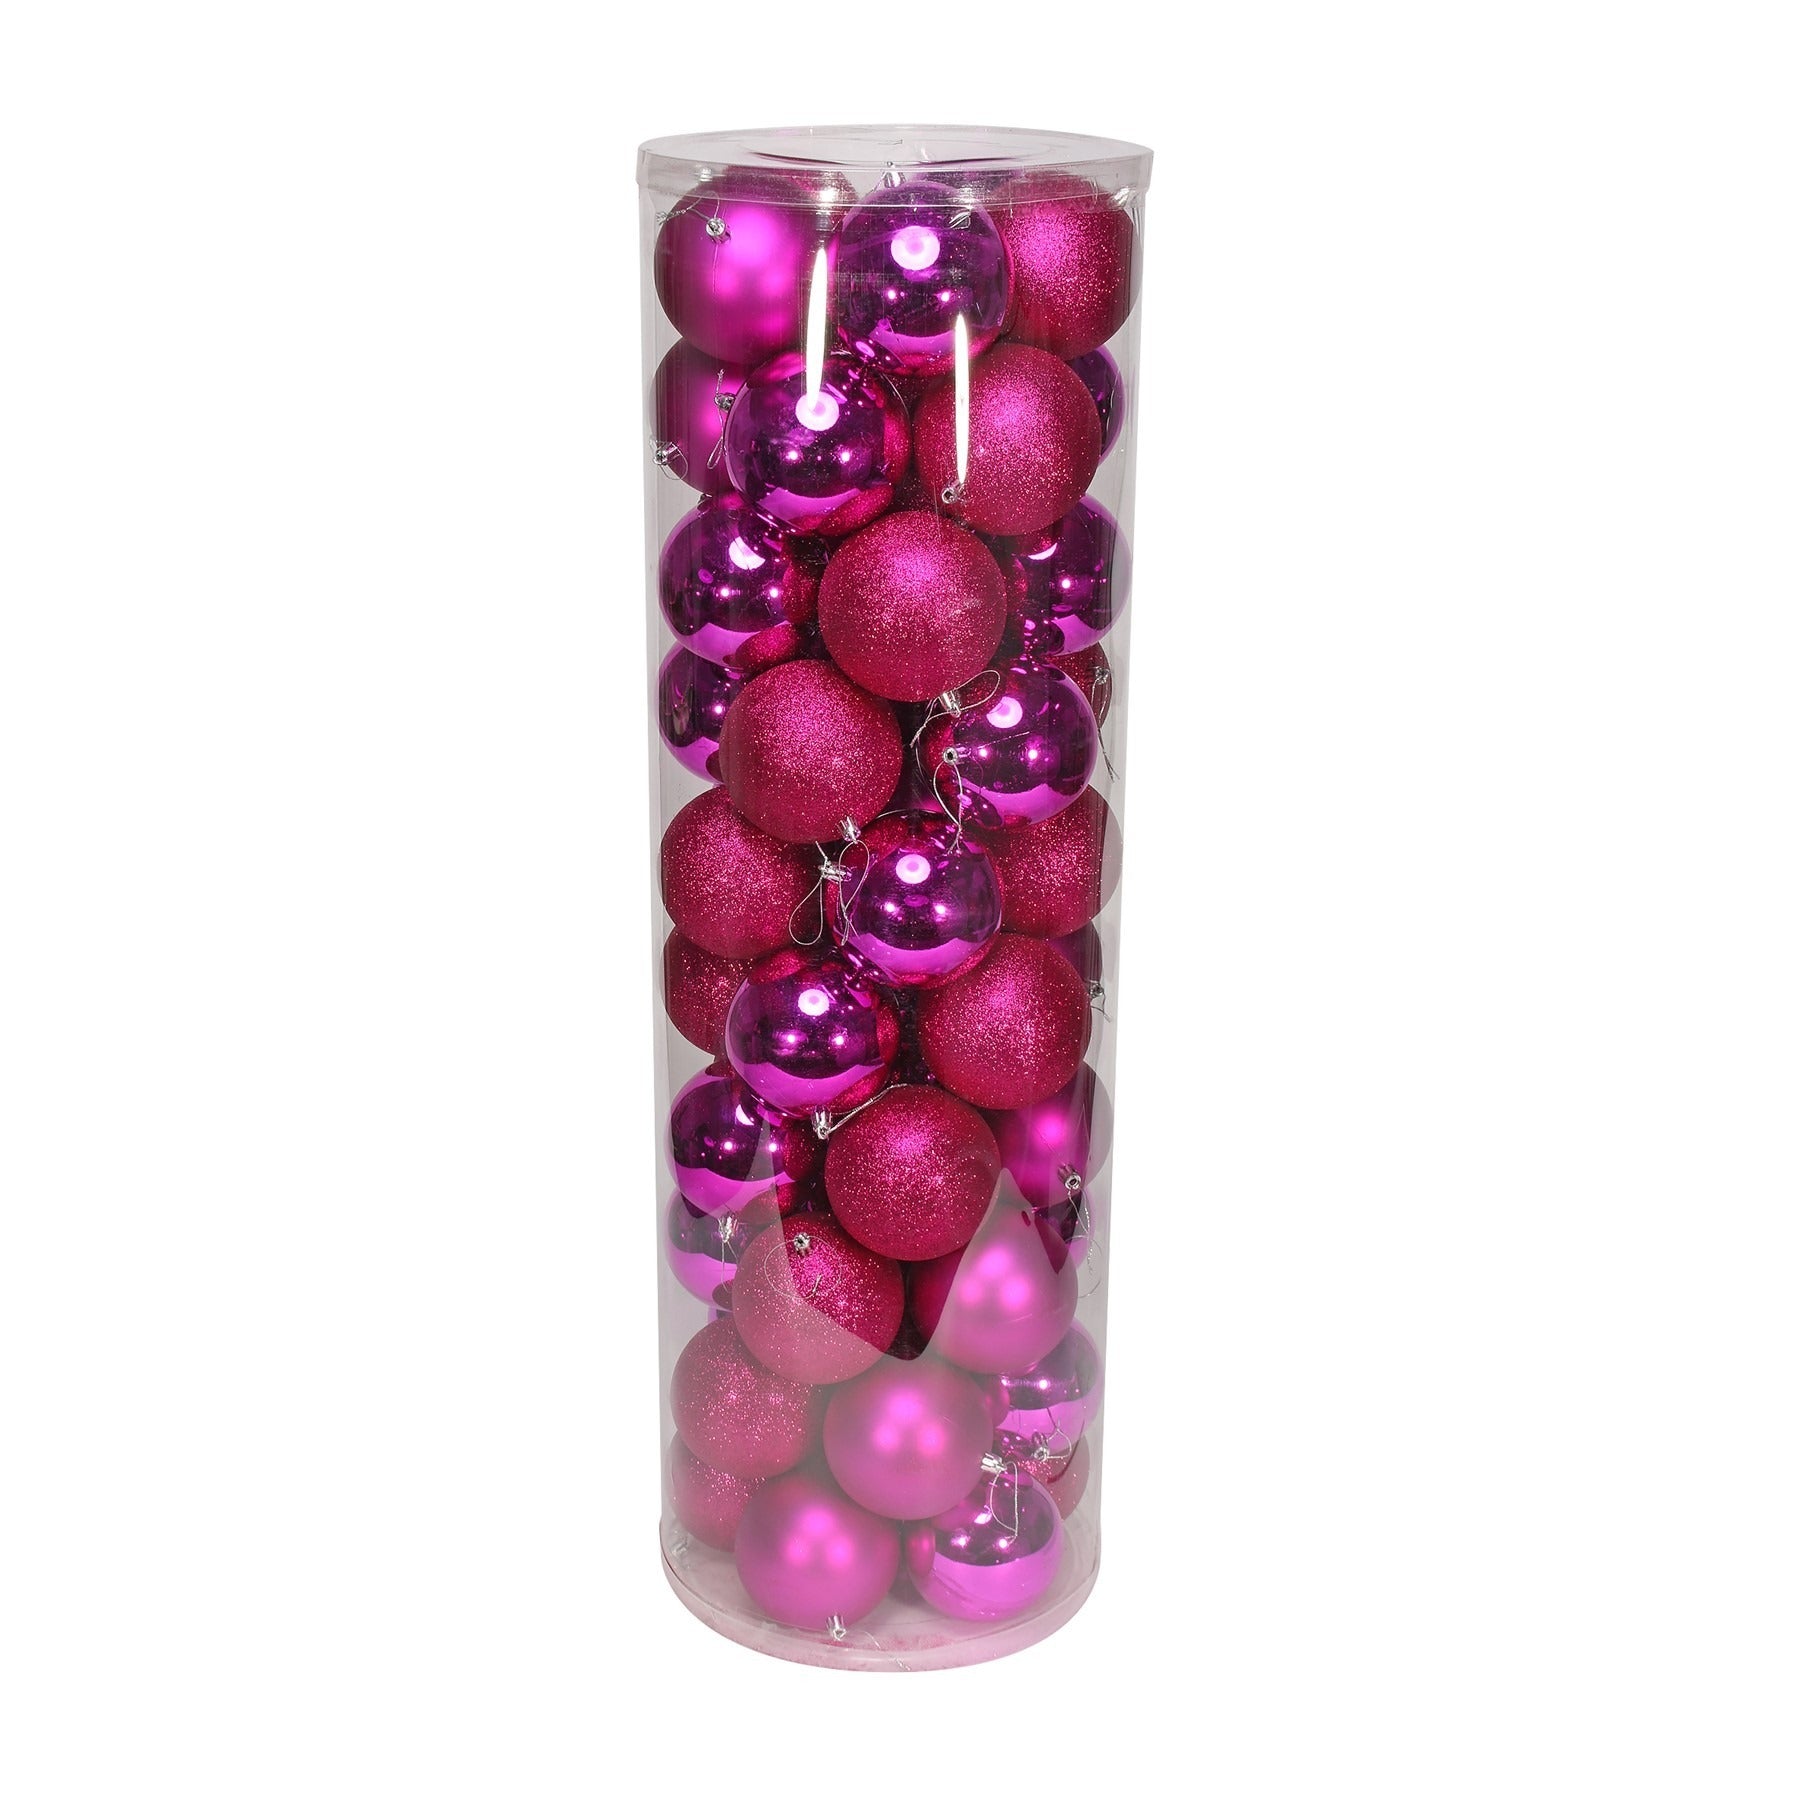 50 Hot Pink Baubles in Matt  Shiny & Glitter Finish (10cm)